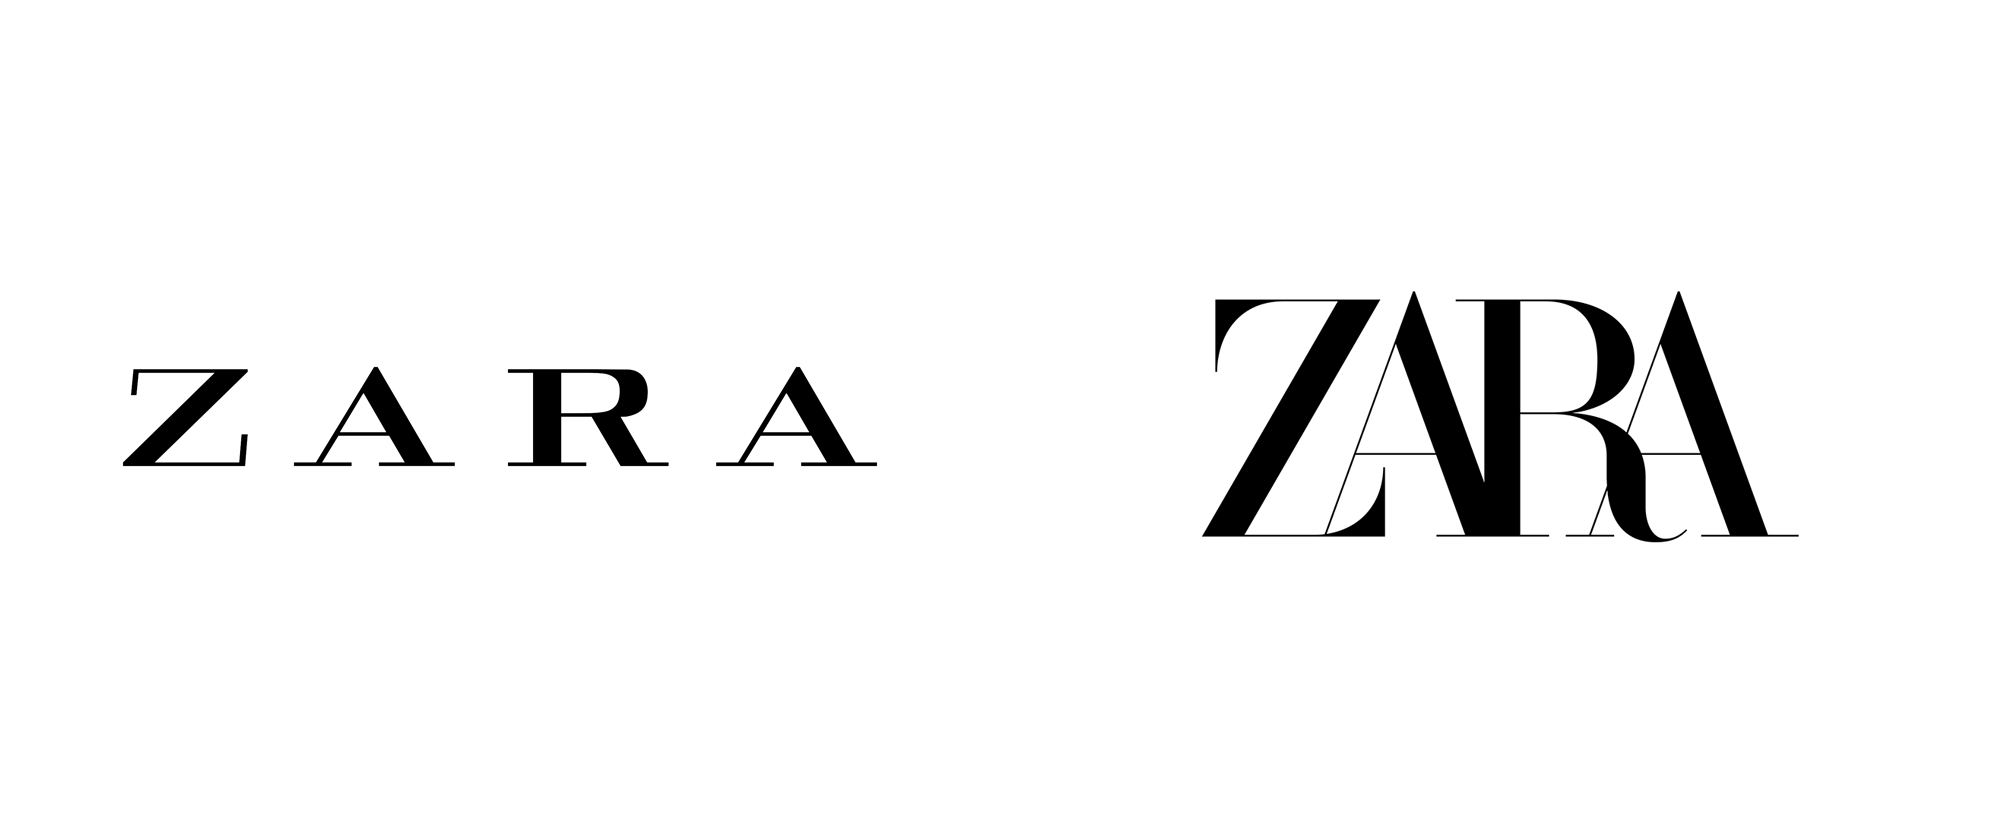 zara 2019 logo before after